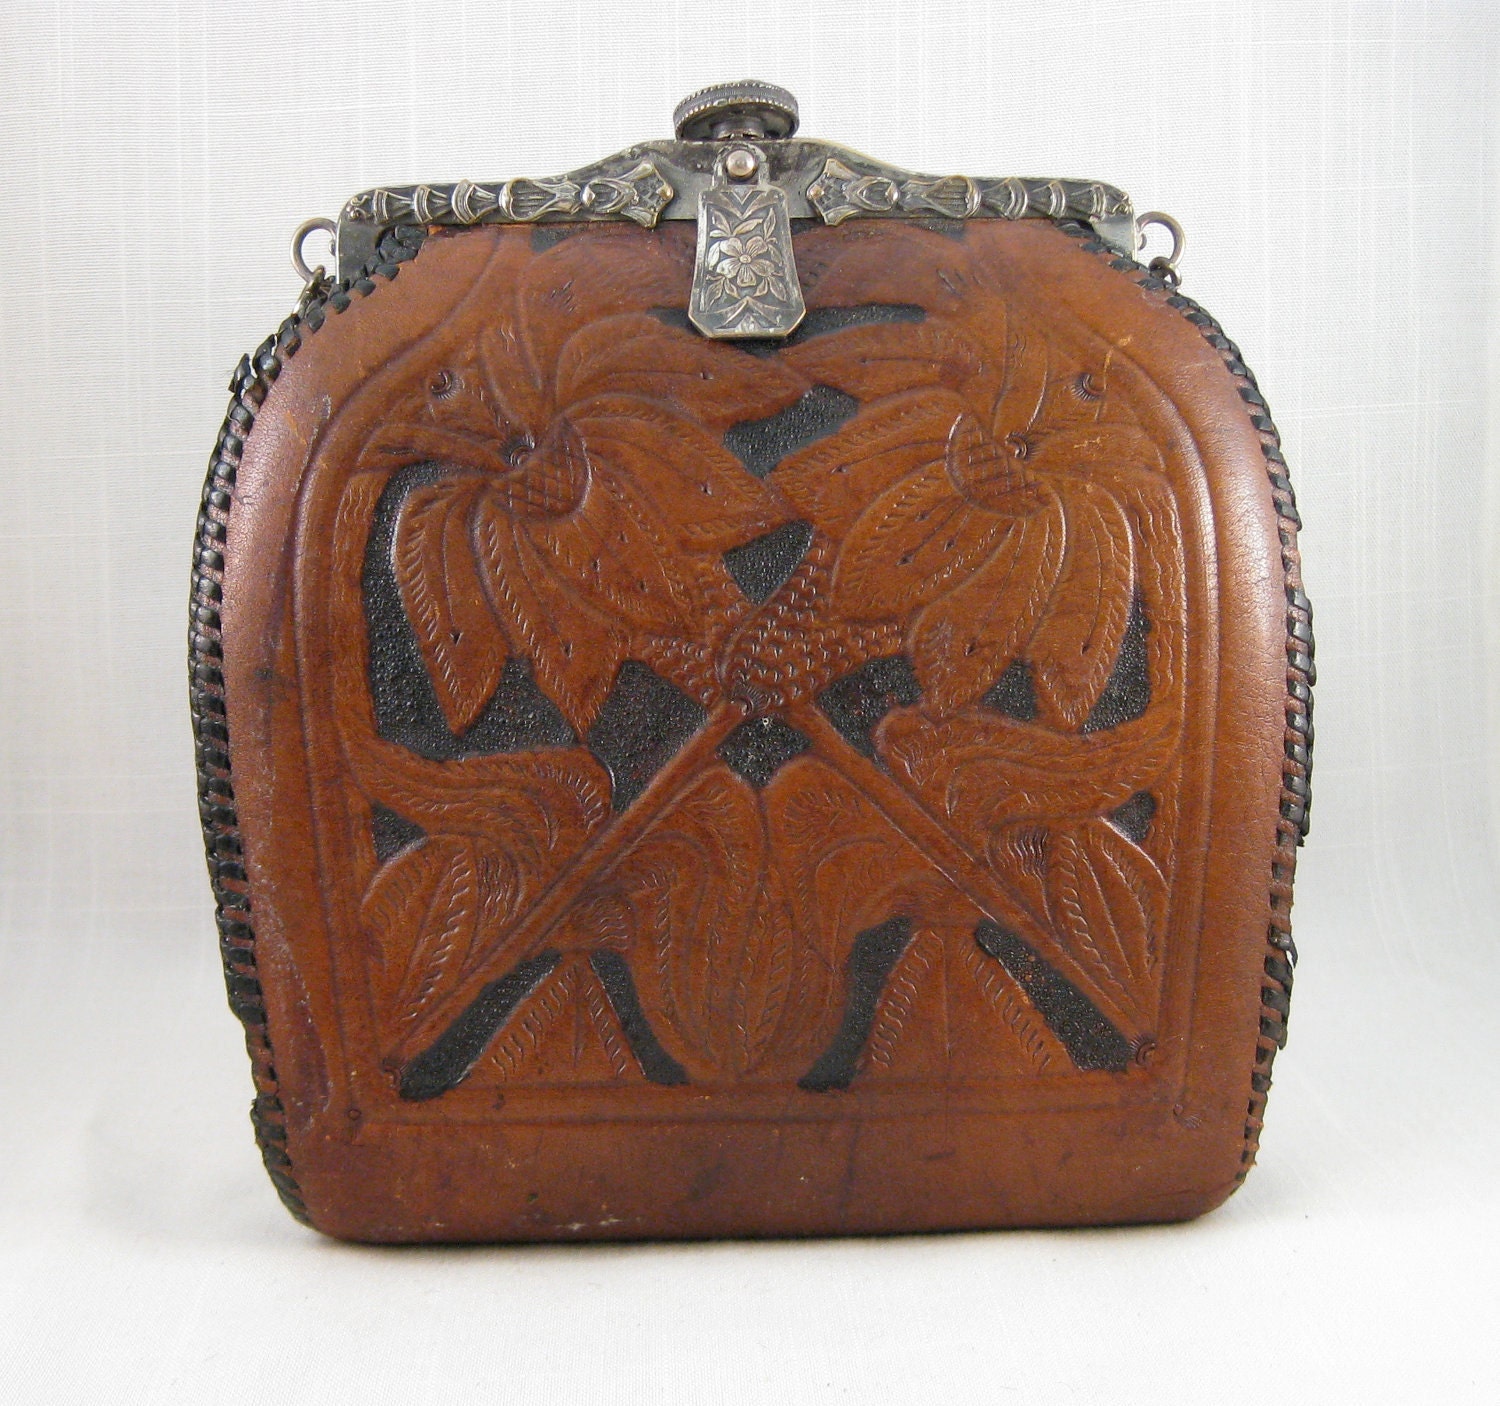 Vintage Art Nouveau Tooled Leather Purse by Vintage360 on Etsy